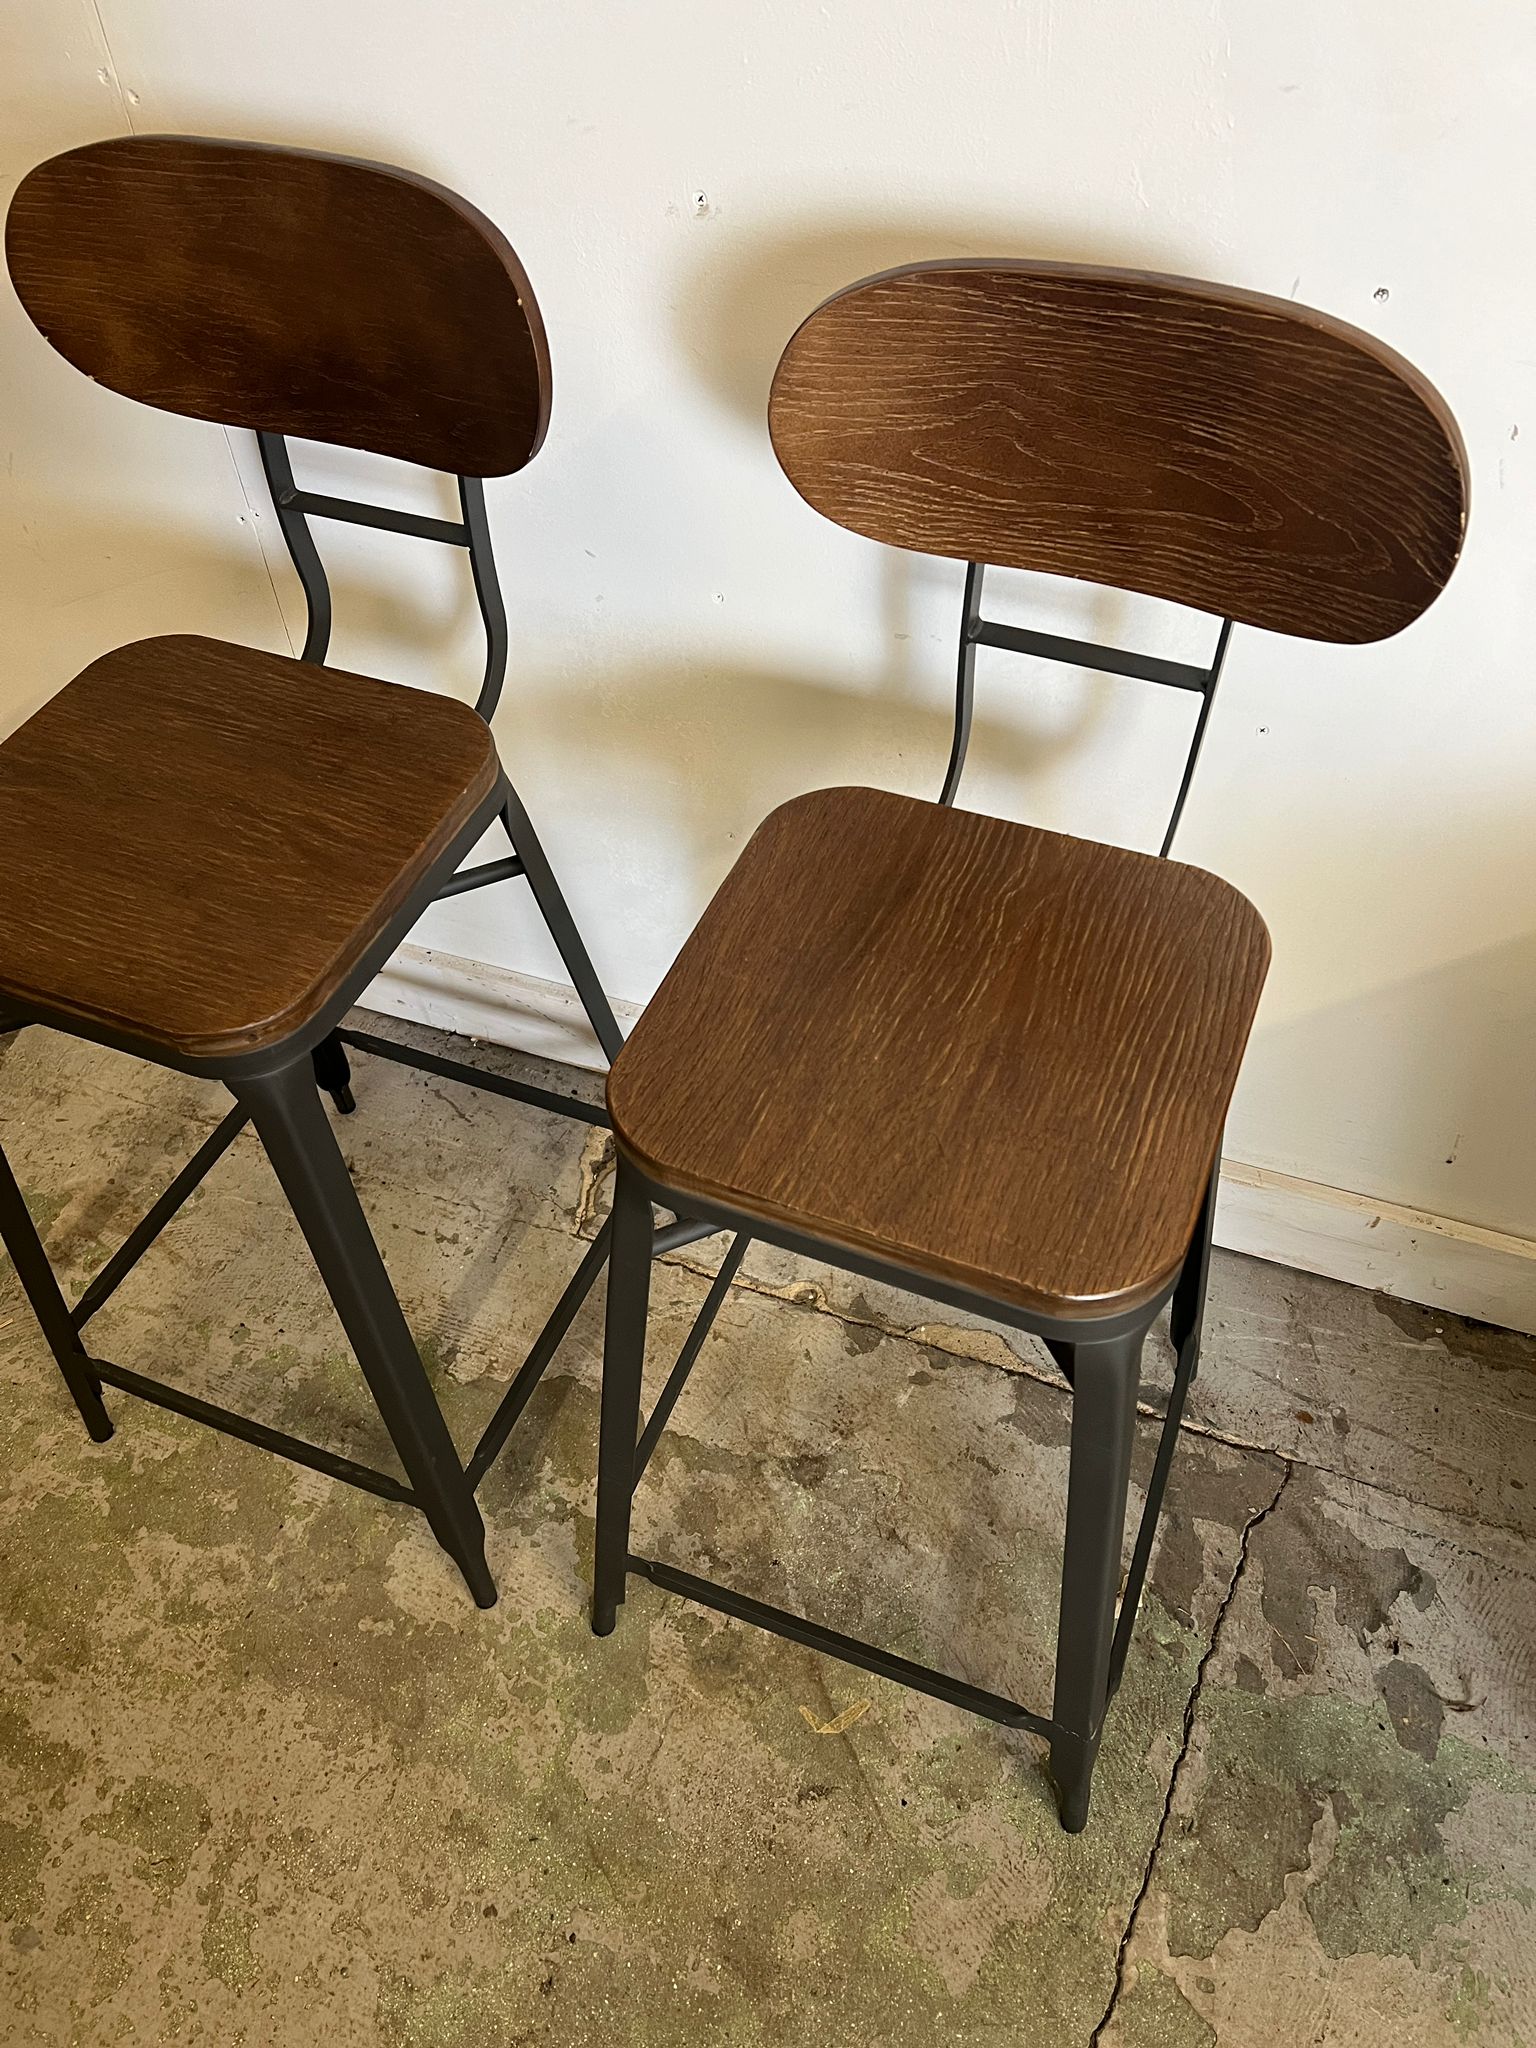 Three farm house bar stools - Image 2 of 4